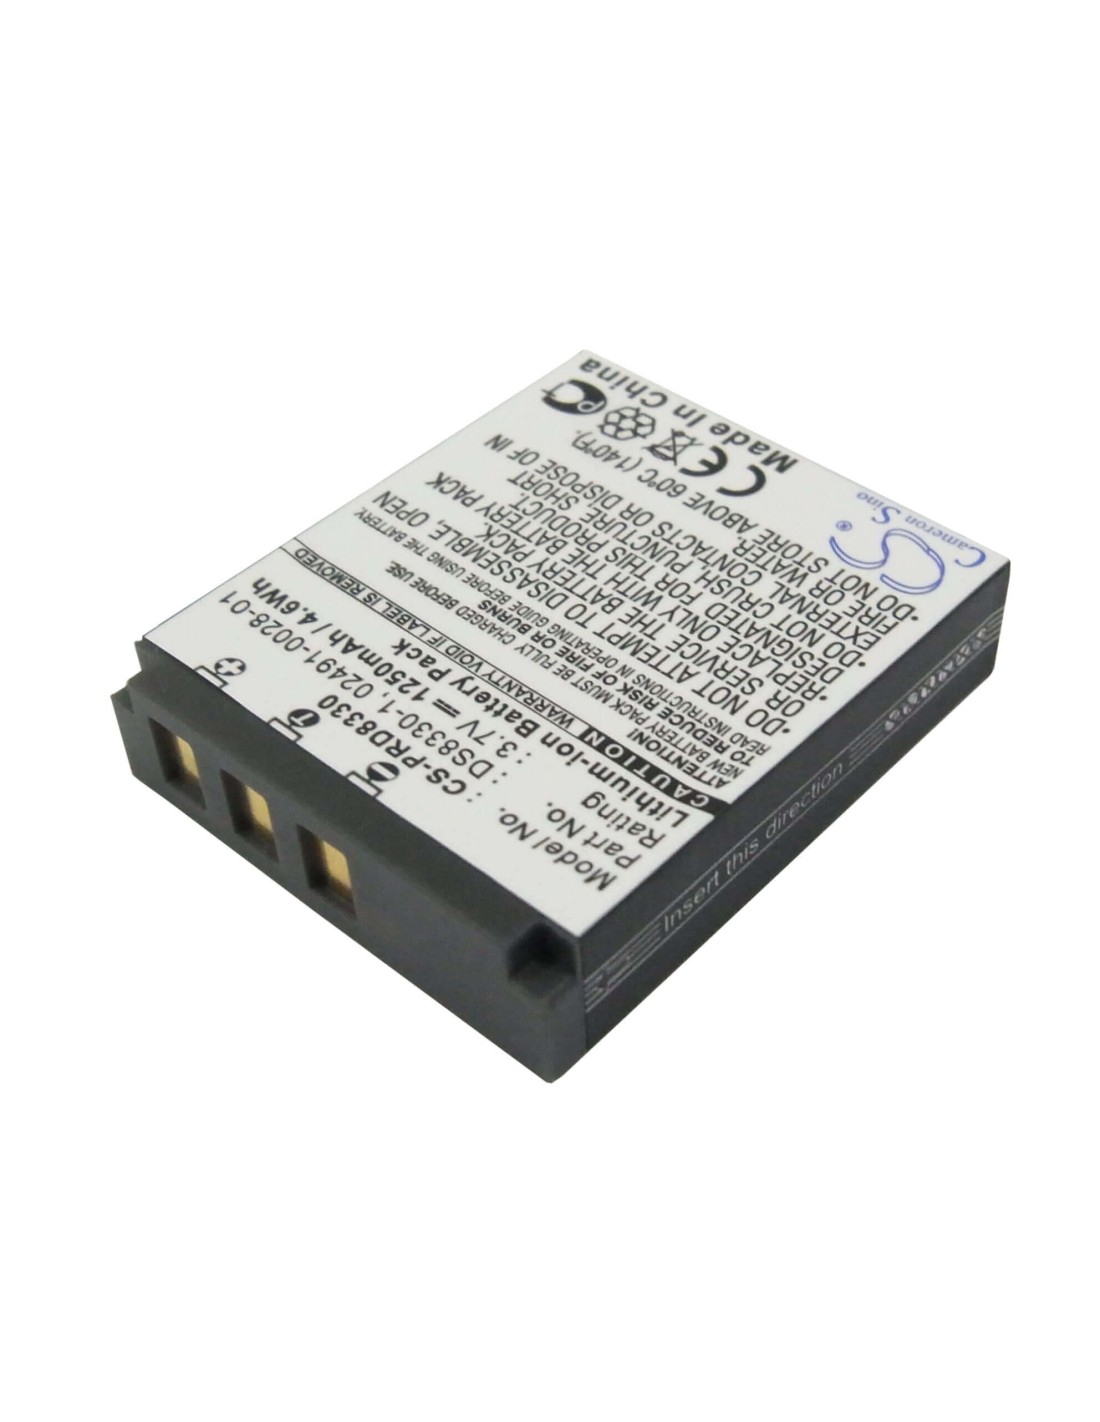 Battery for Maginon Dc-8300, Dc-8600, Dc-x, Dc-xz6 3.7V, 1250mAh - 4.63Wh